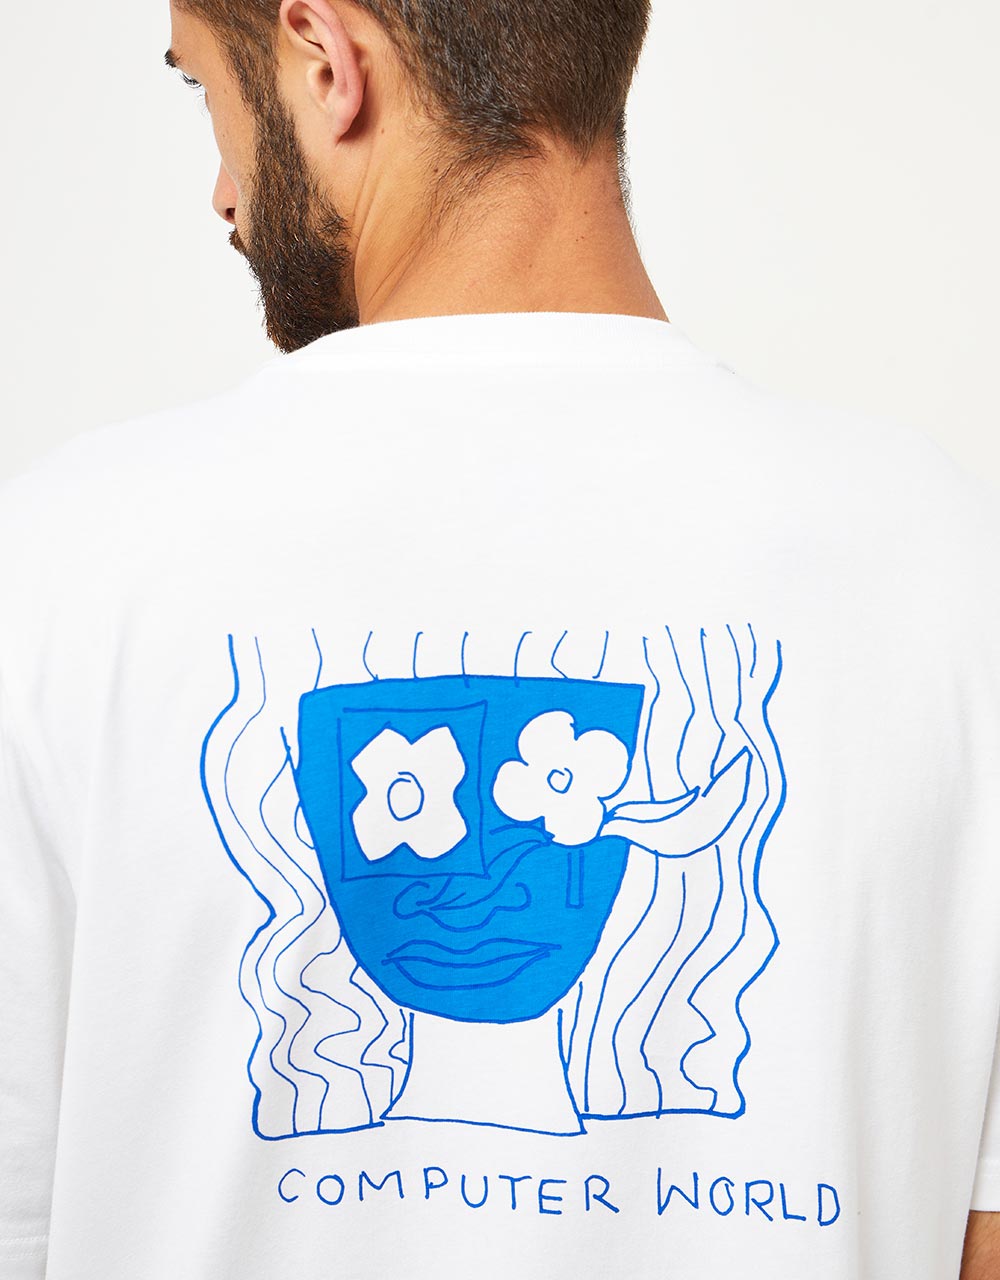 Adidas Shmoo Art T-Shirt - White/Bluebird/Team Royal Blue